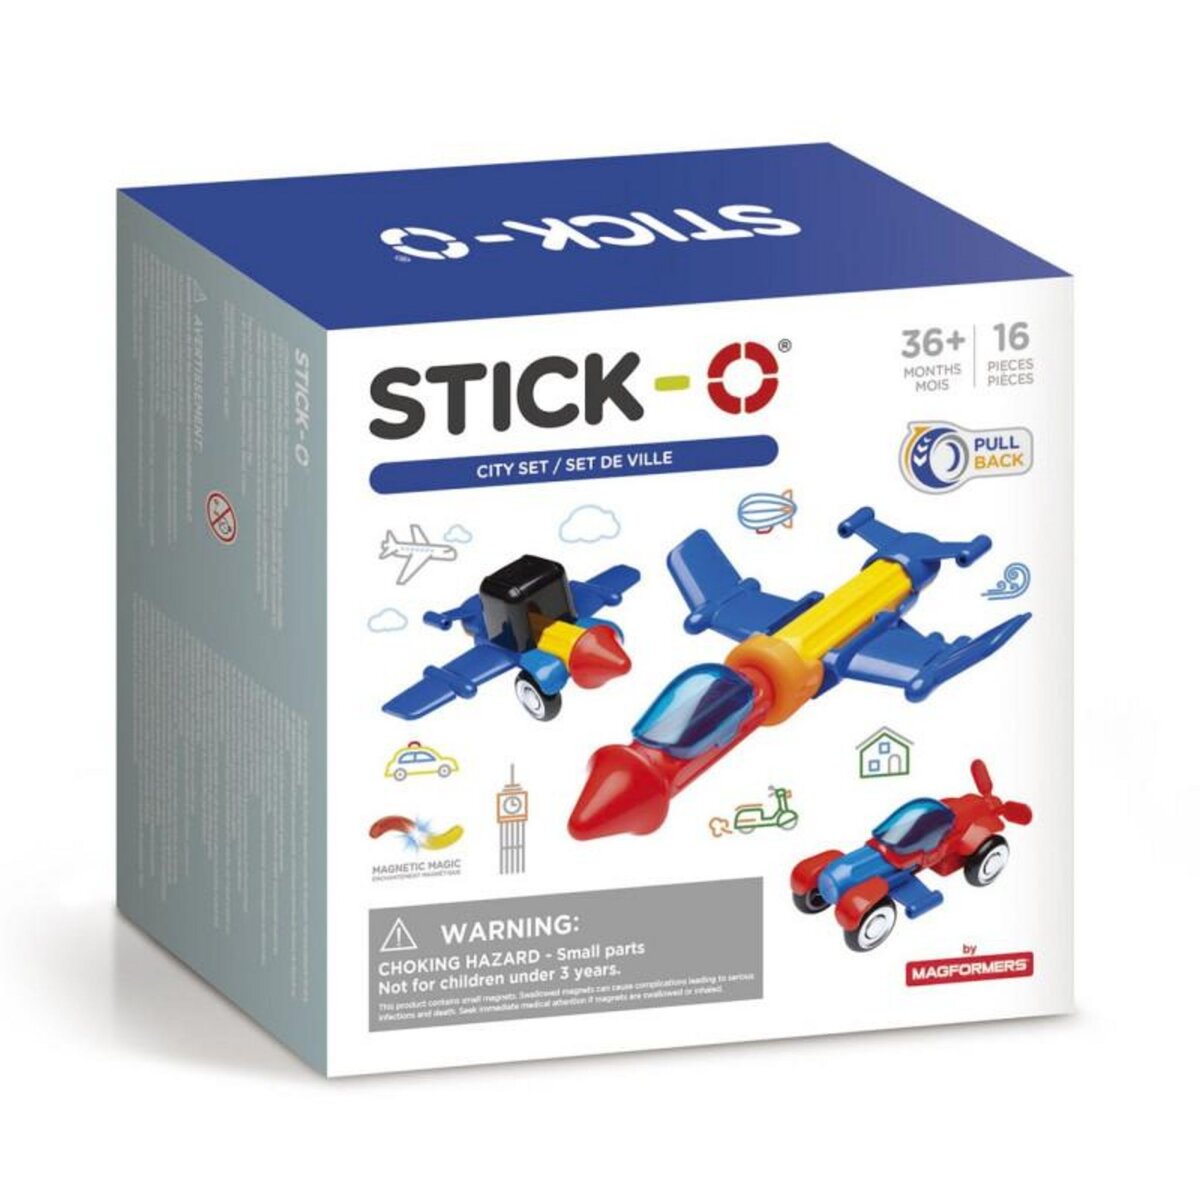 STICK-O Stick-O City Set, 16 pcs.